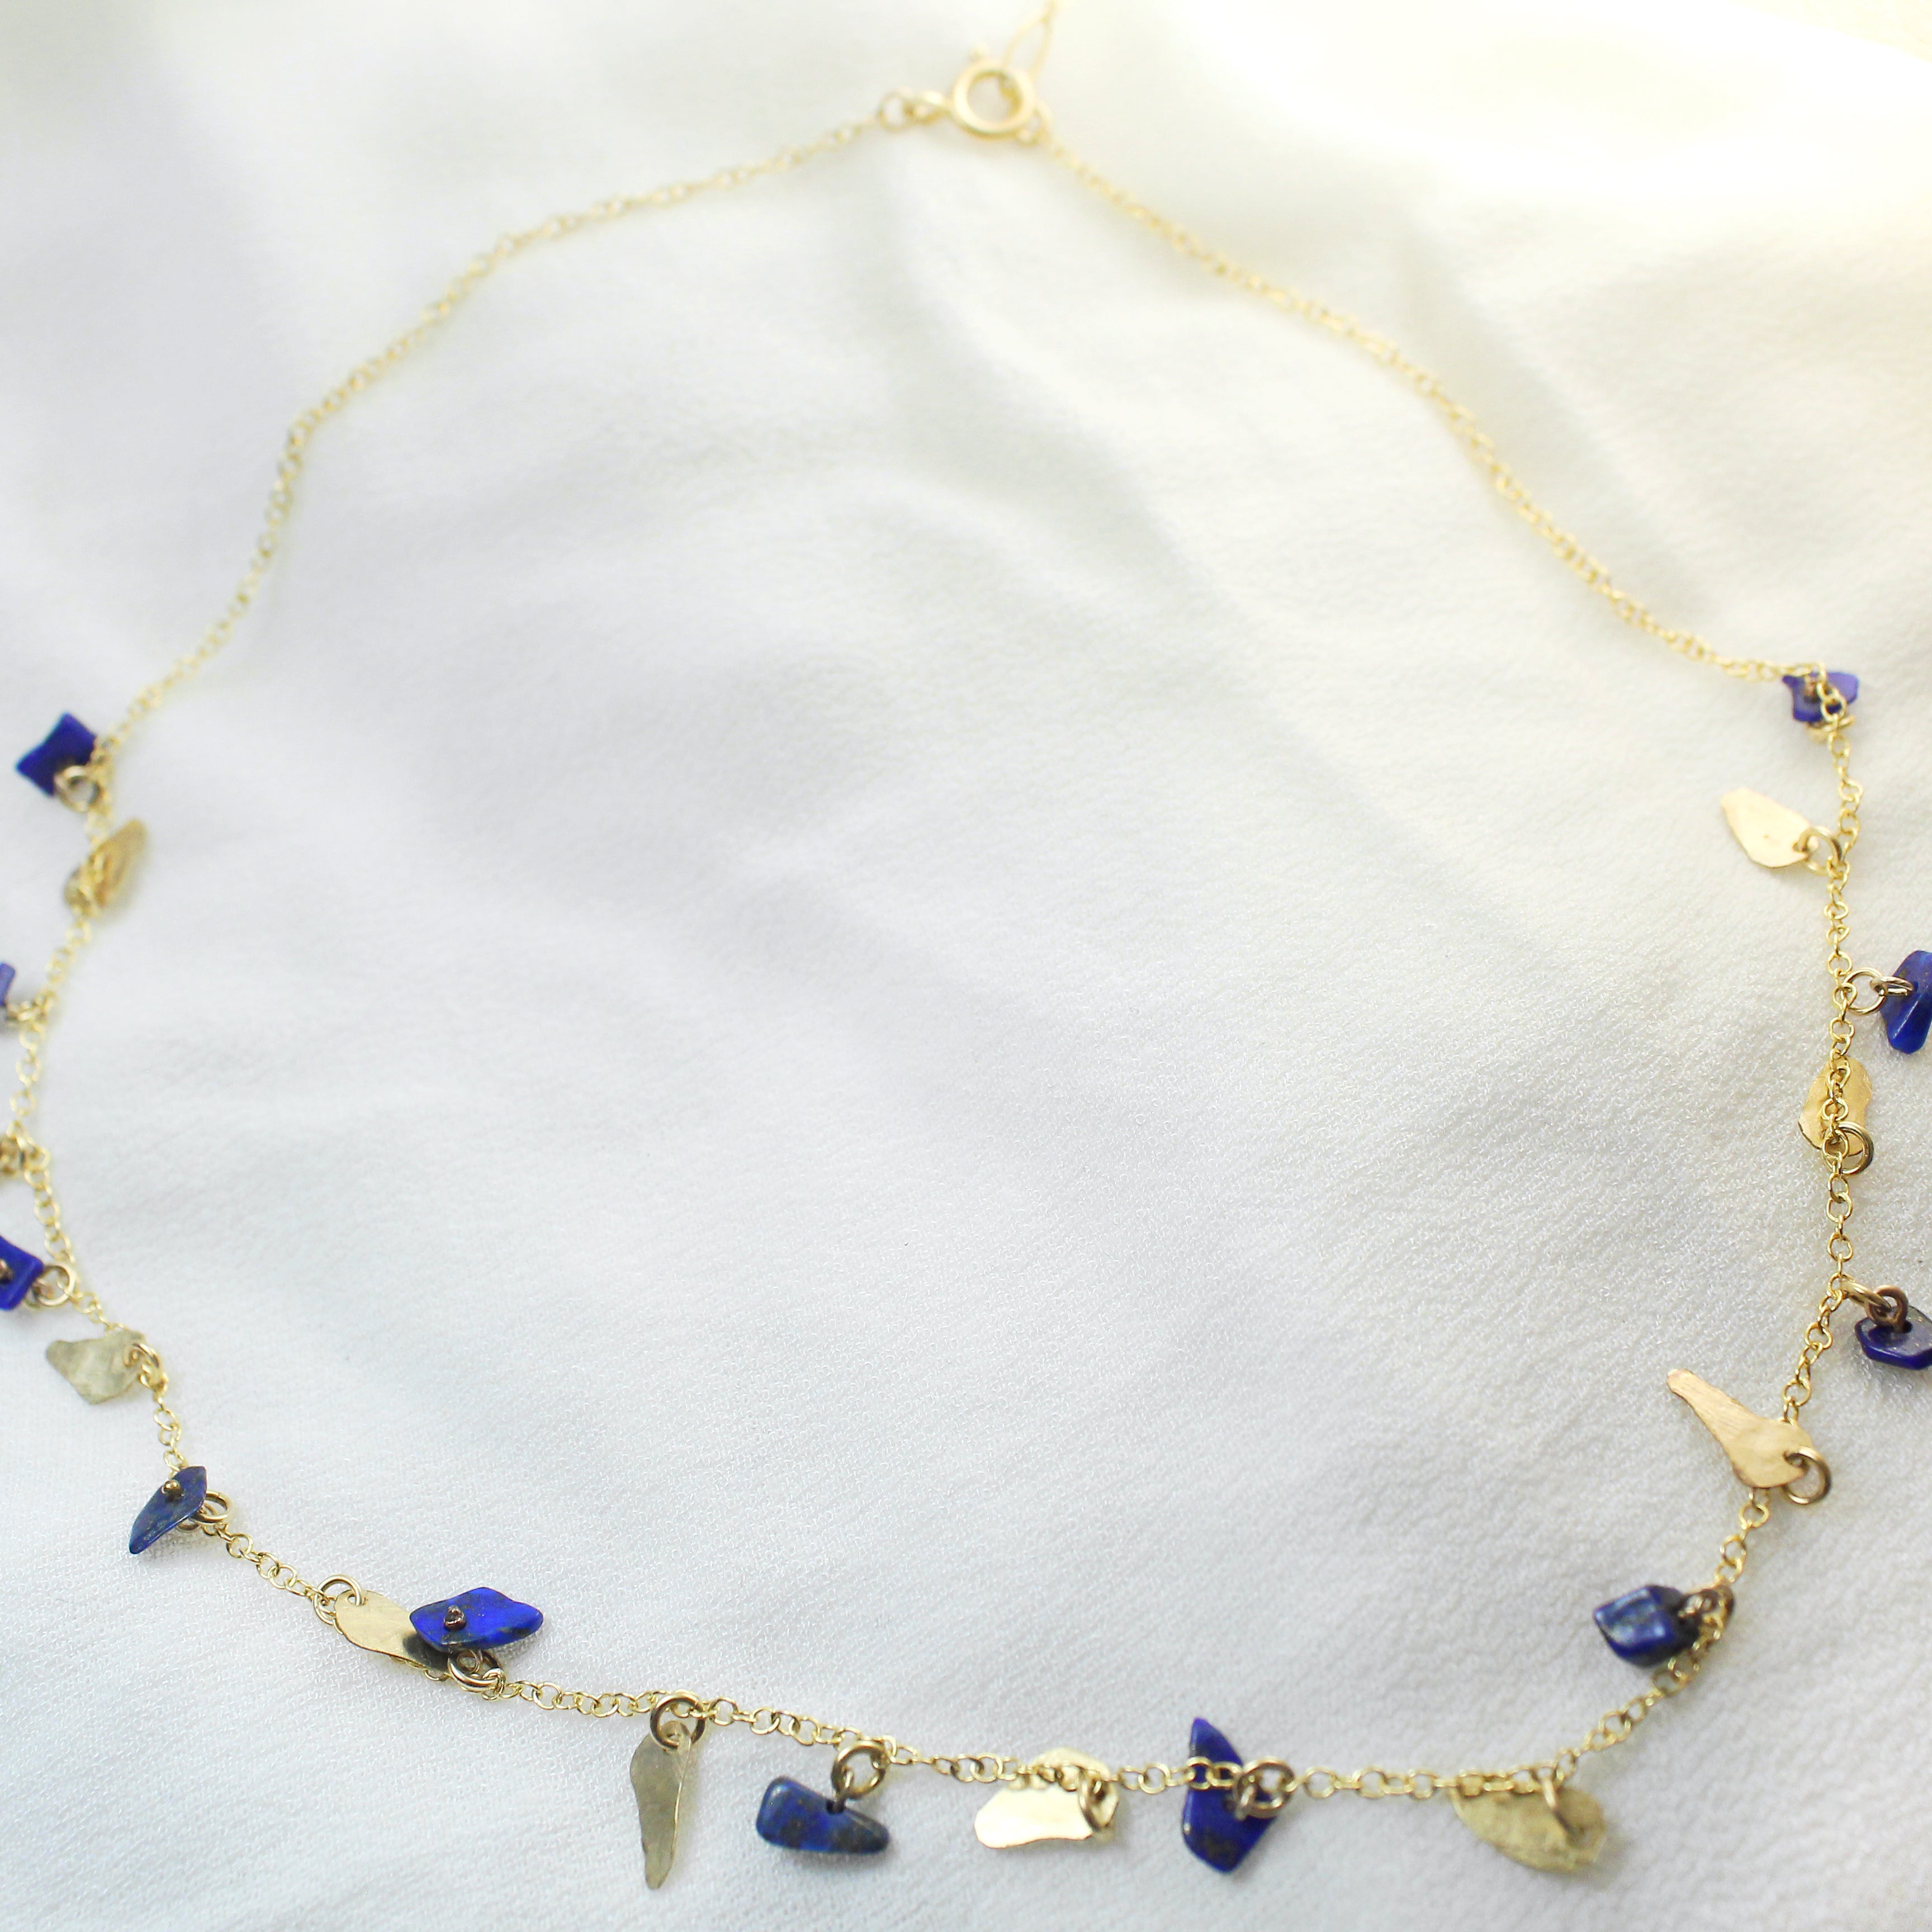 Golden Leaves - Gold-Filled Leaves & Lapis Lazuli Gemstone Necklace